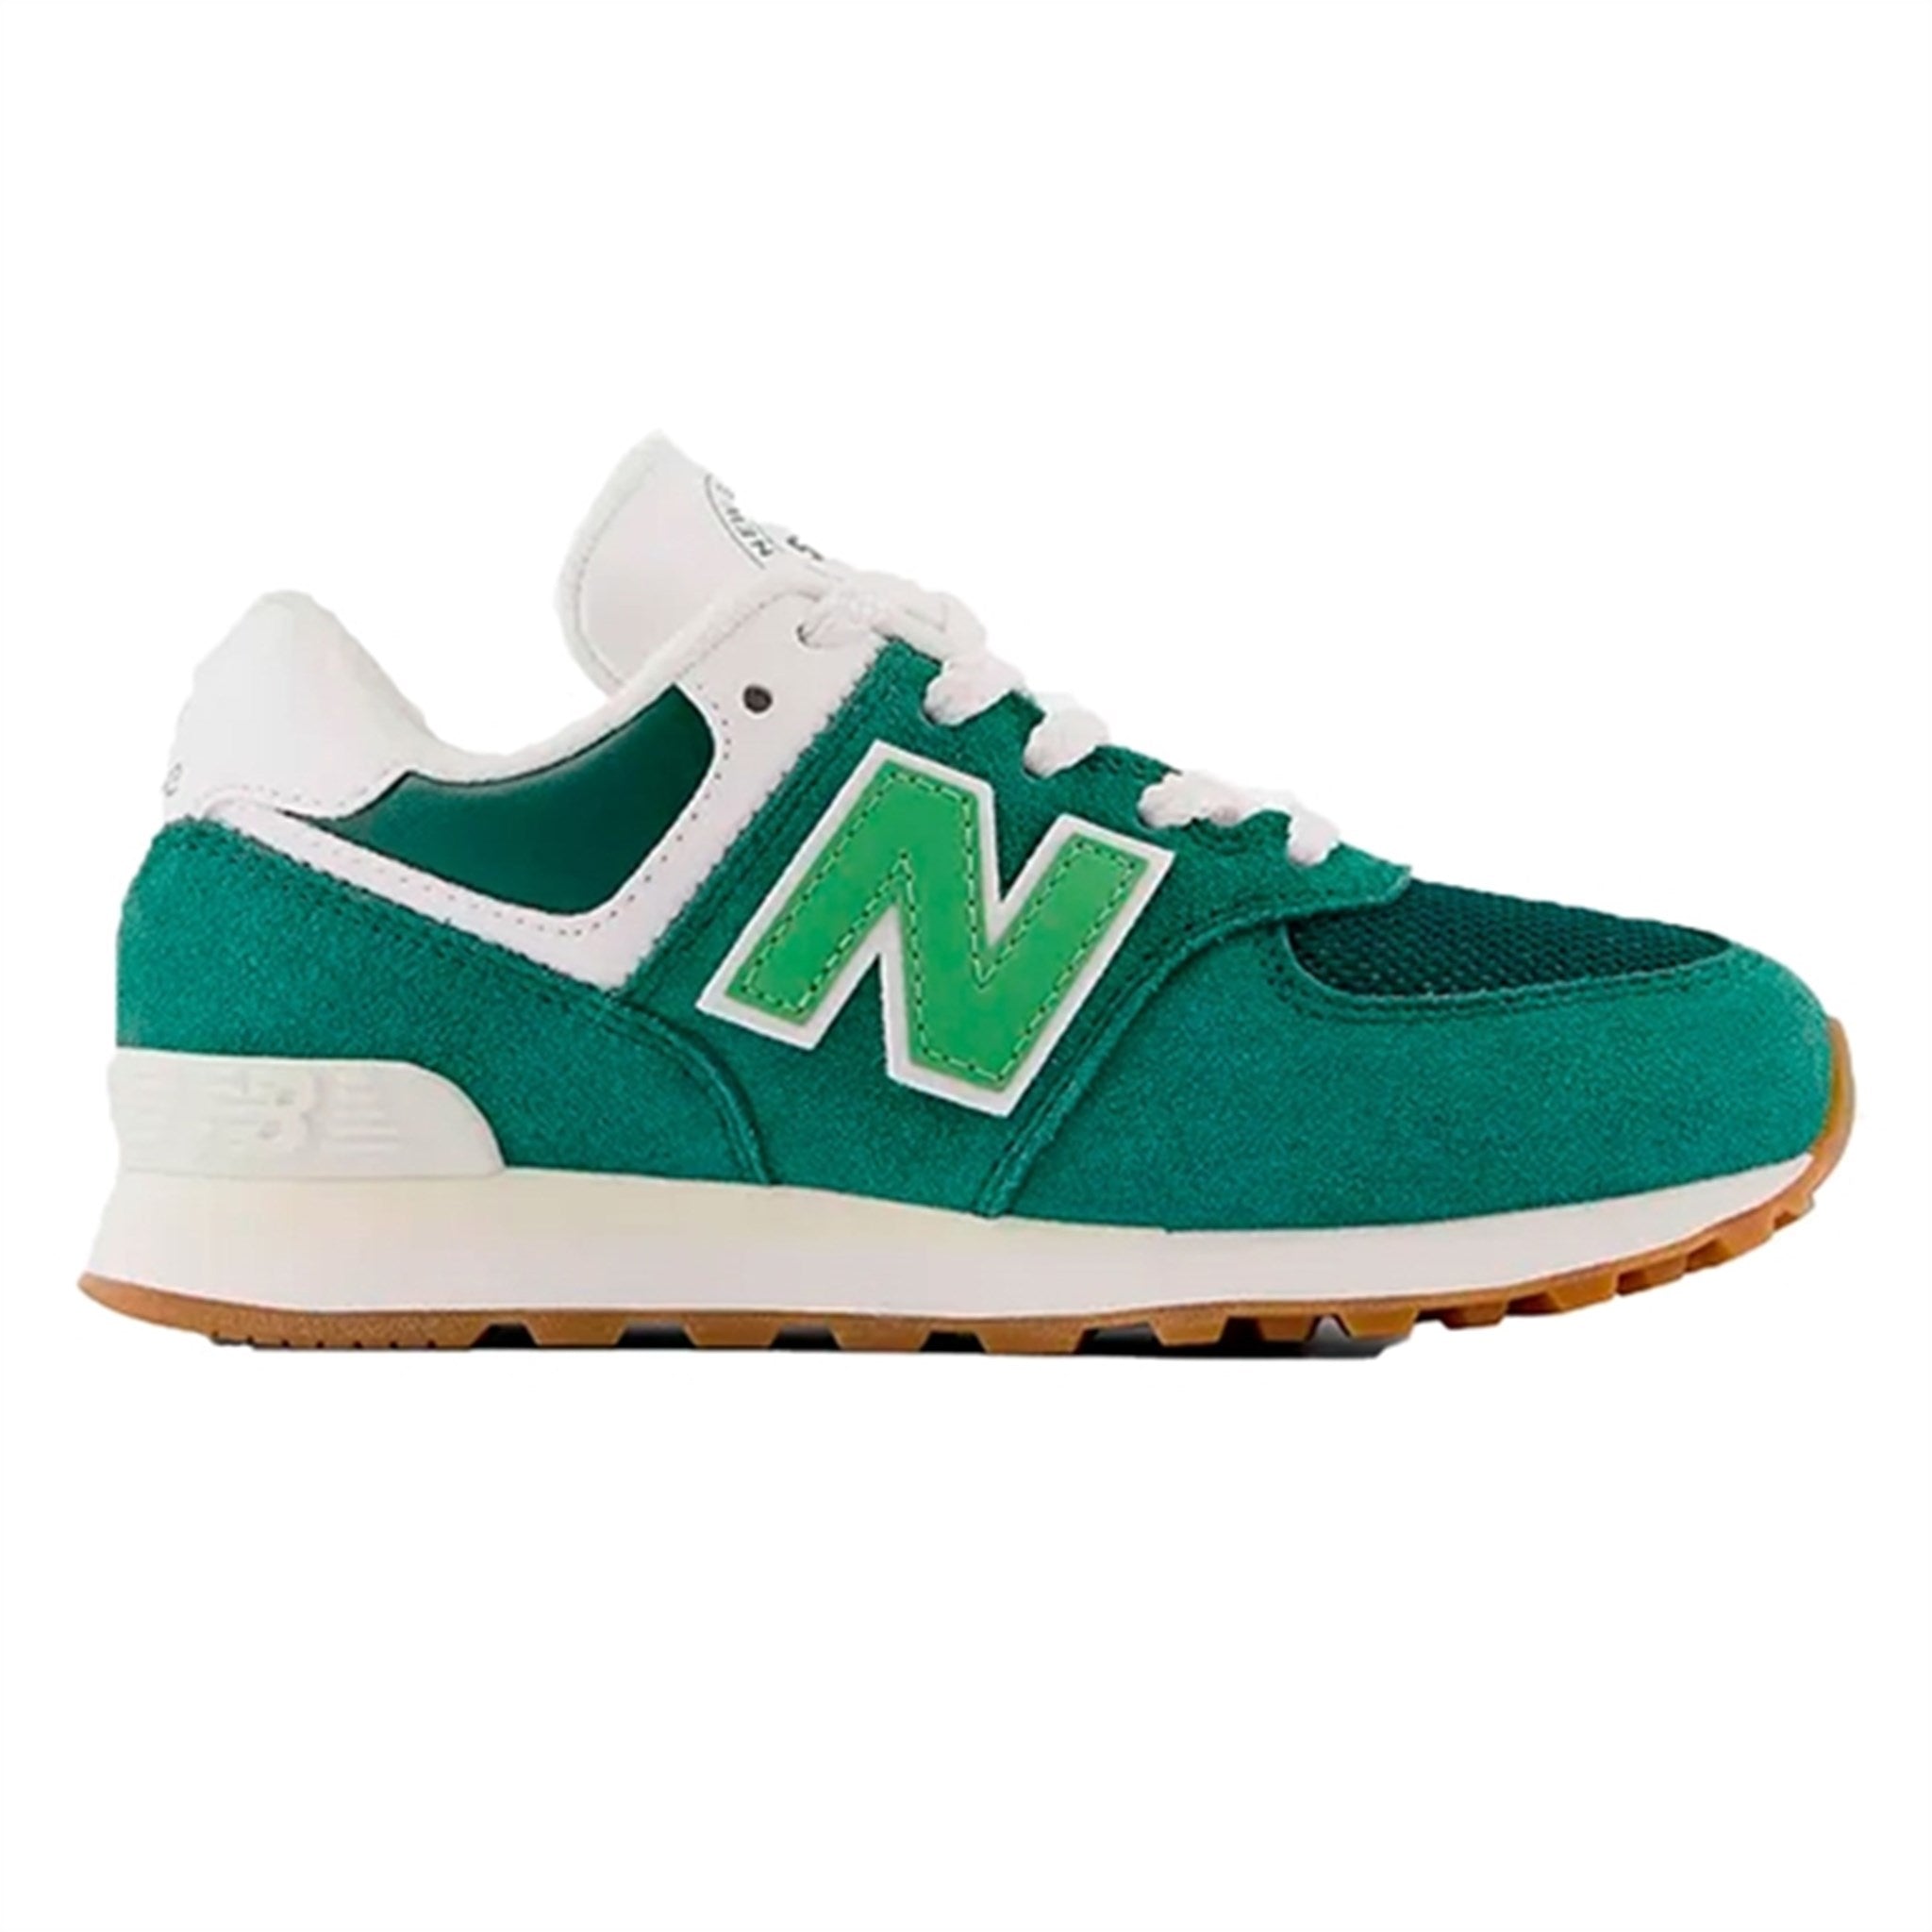 New Balance 574 Nightwatch Green Sneakers